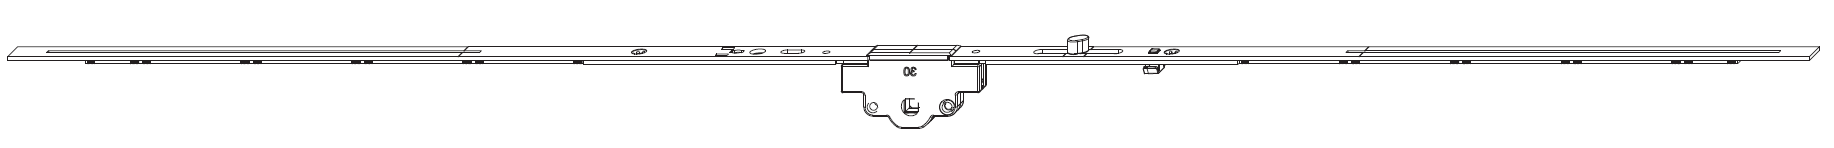 MAICO -  Cremonese BILICO bilico verticale prolungabile senza dss - gr / dim. 1250 - entrata 30 - lbb/hbb 801 - 1250